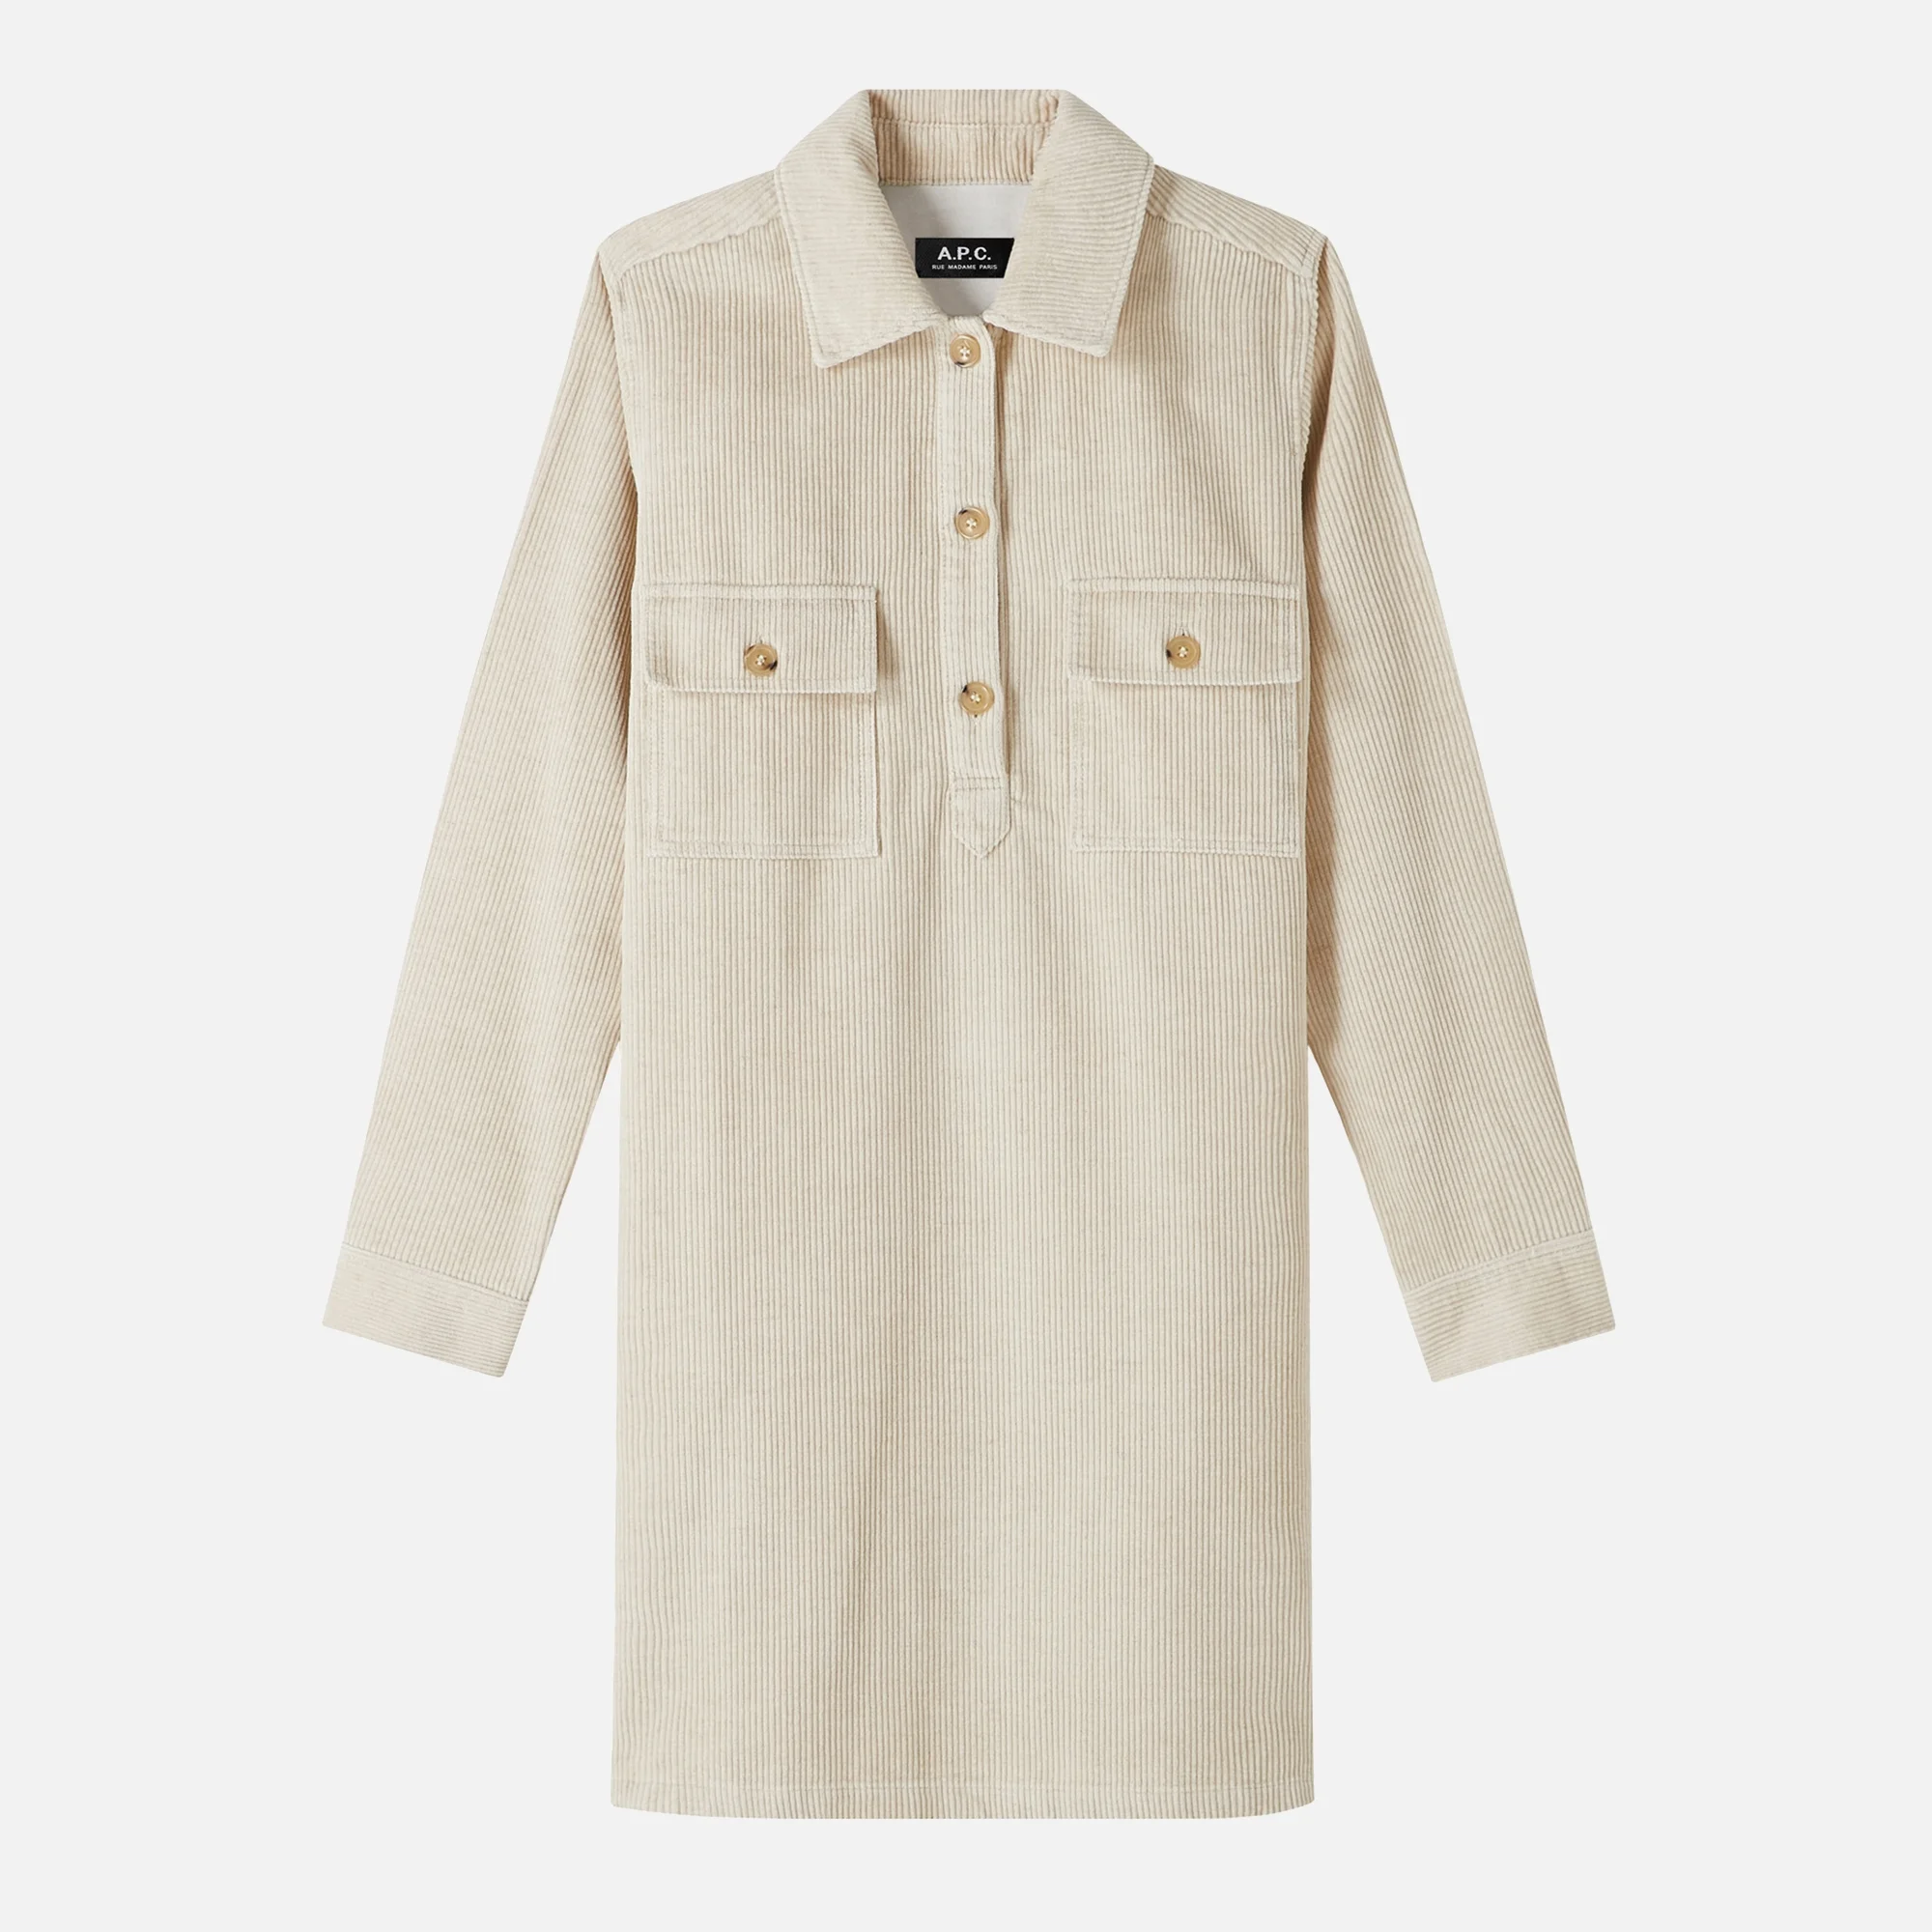 A.P.C. Mia Cotton-Blend Corduroy Shirt Dress - FR 34/UK 6 Image 1